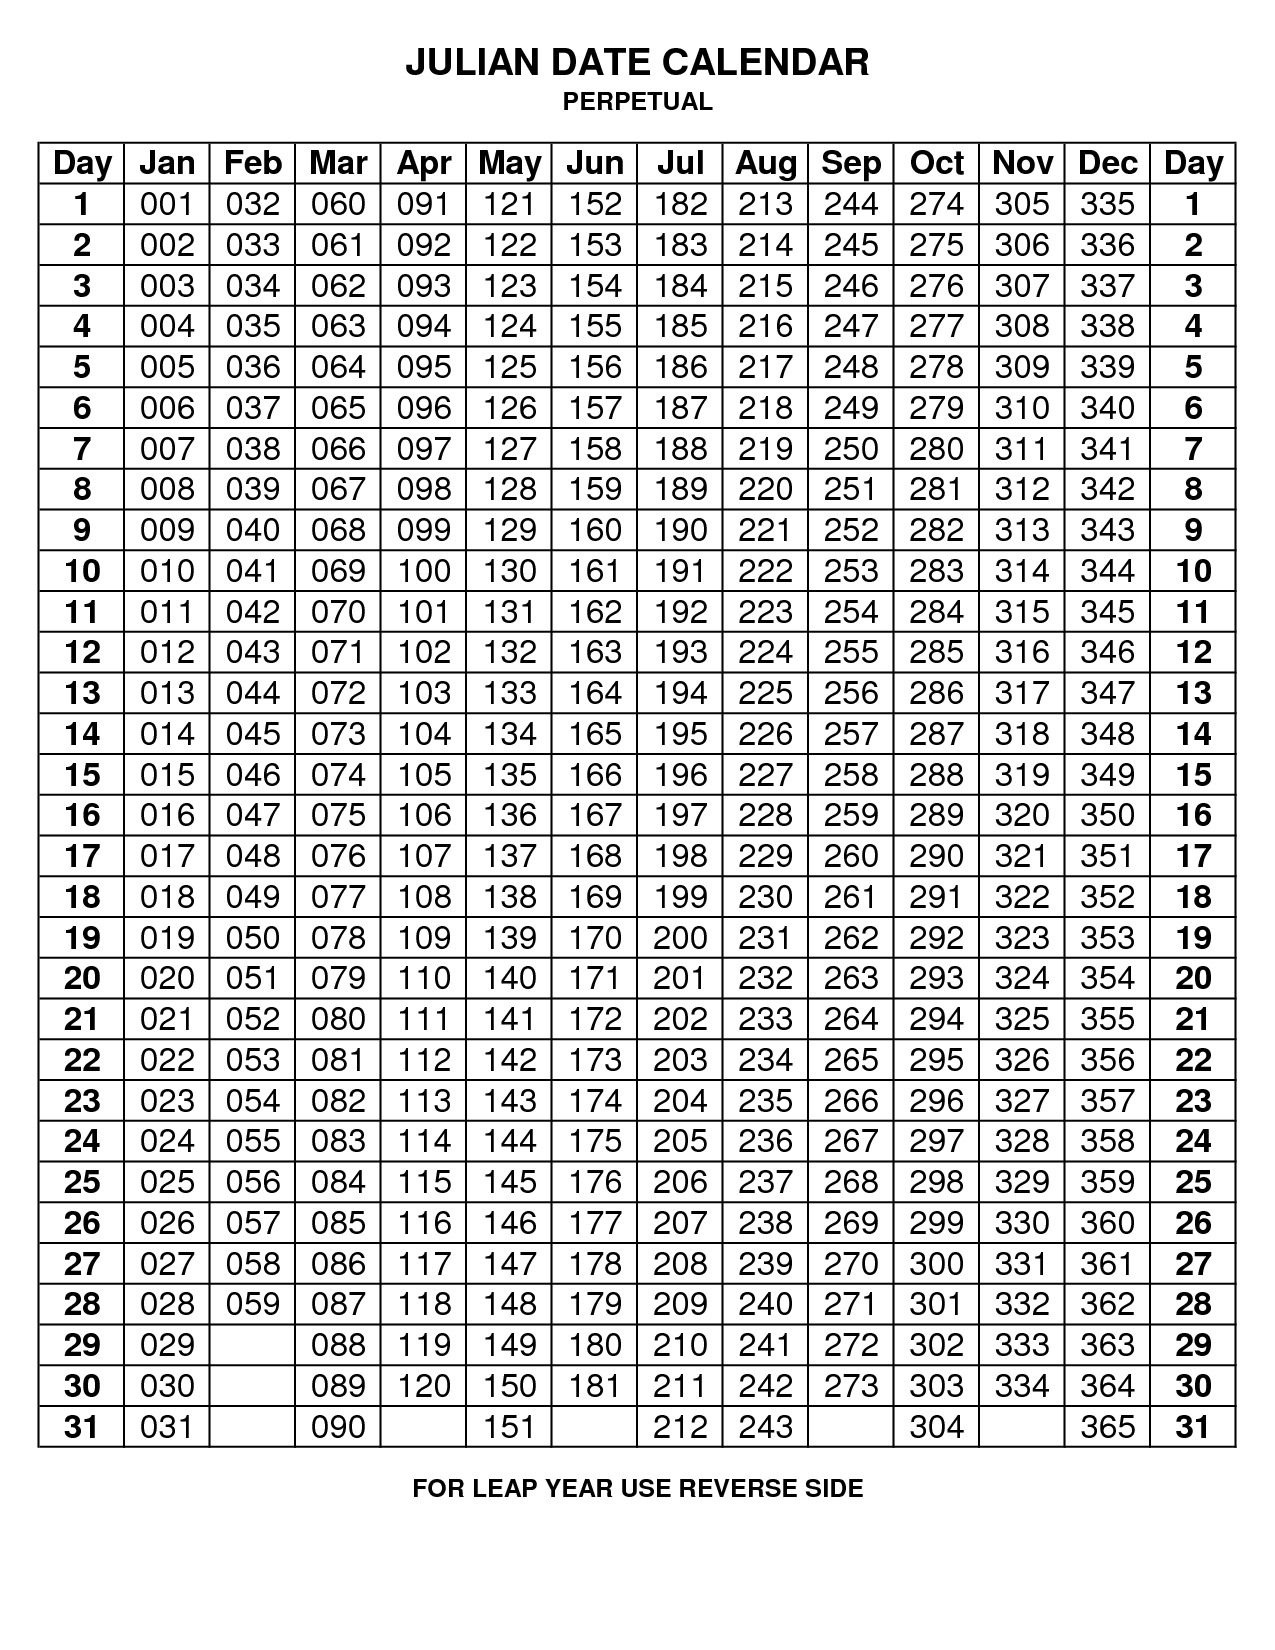 Non Leap Year Calendar | Calendar For Planning-Monthly Calendar With Julian Dates 2020